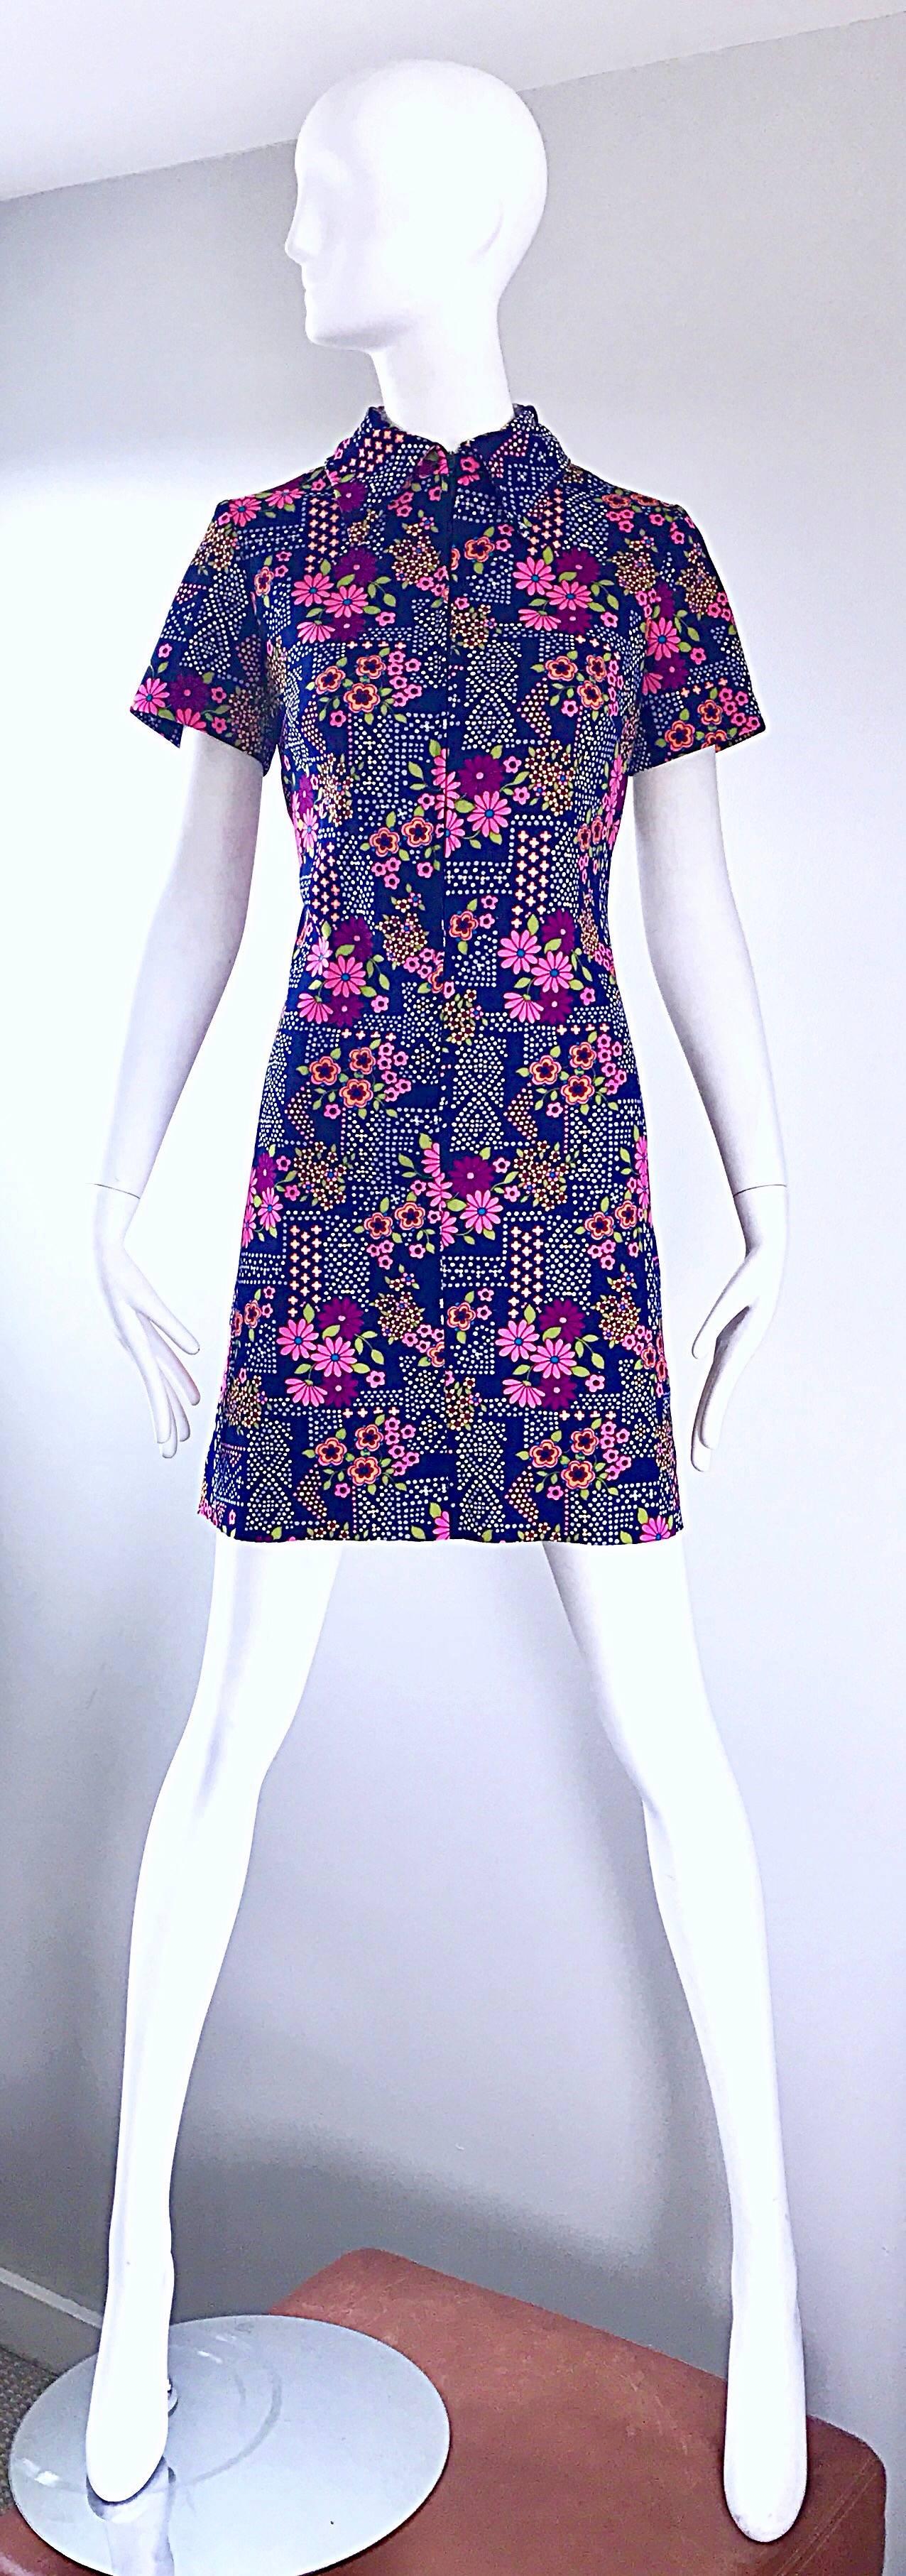 Women's Chic 1960s Colorful Daisy Flower Print Vintage 60s Mod Mini Shirt Shift Dress